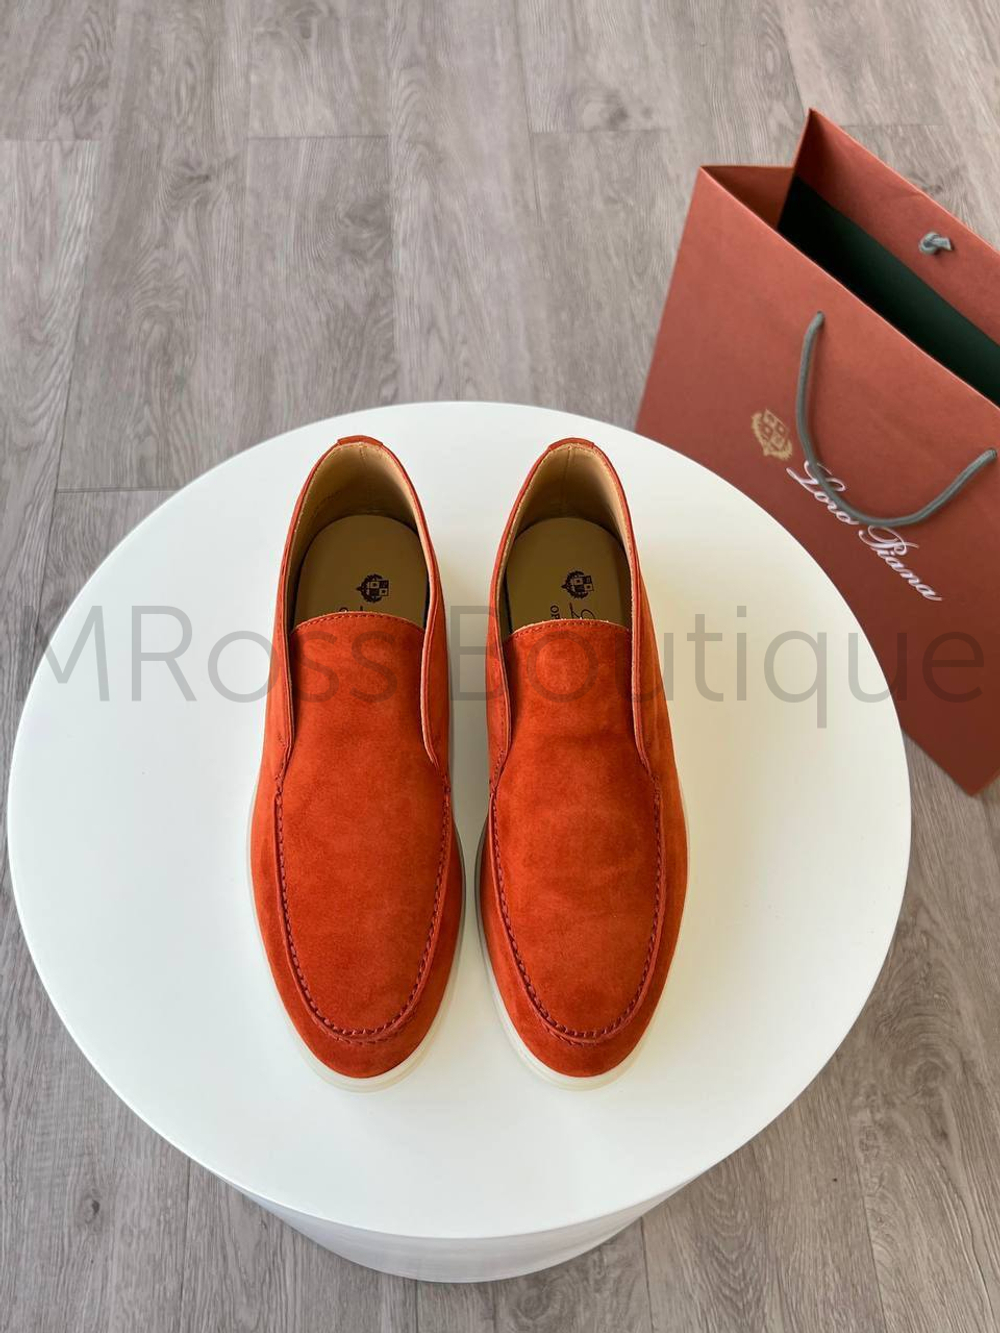 Оранжевые замшевые ботинки Open Walk Loro Piana (Лоро Пиано) премиум класса